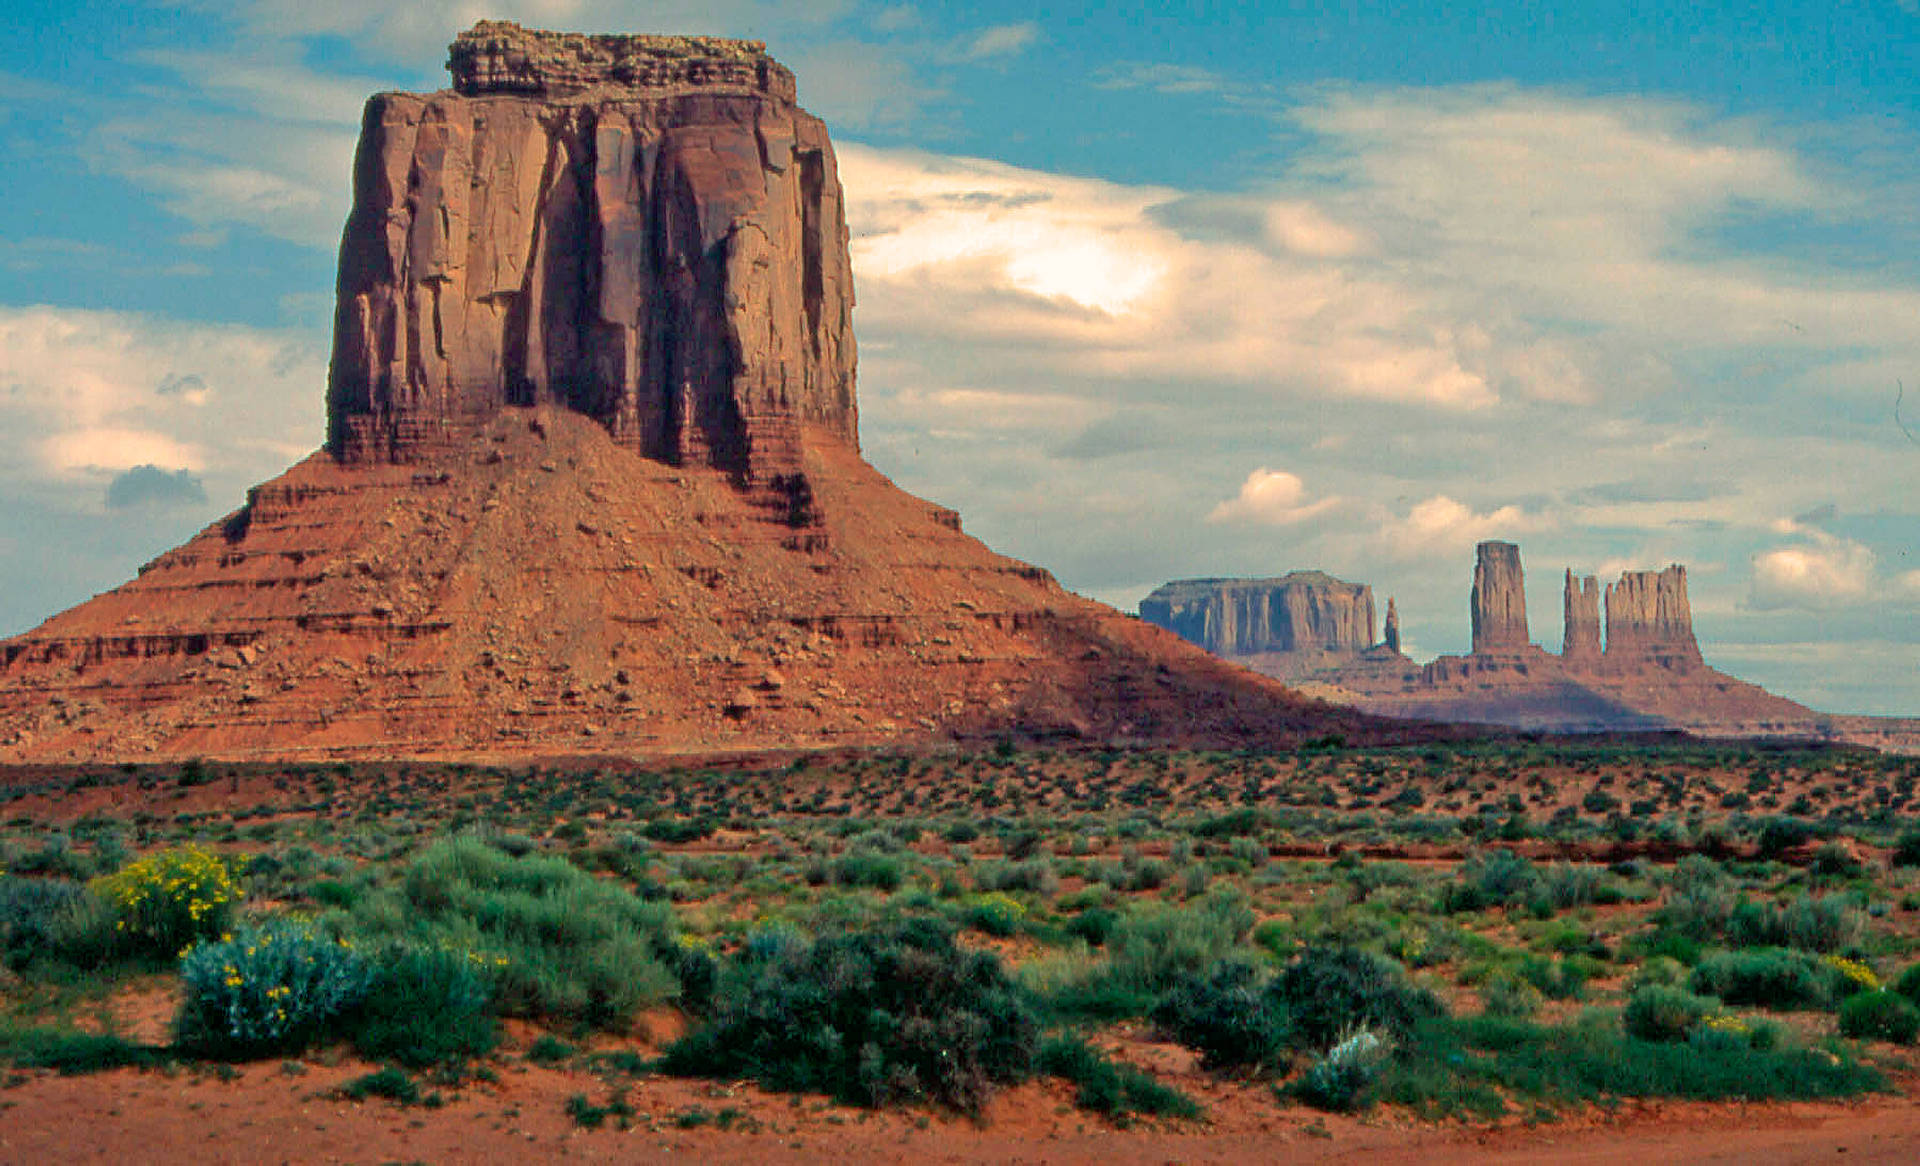 "Majestic Landscape of Arizona Desert" Wallpaper